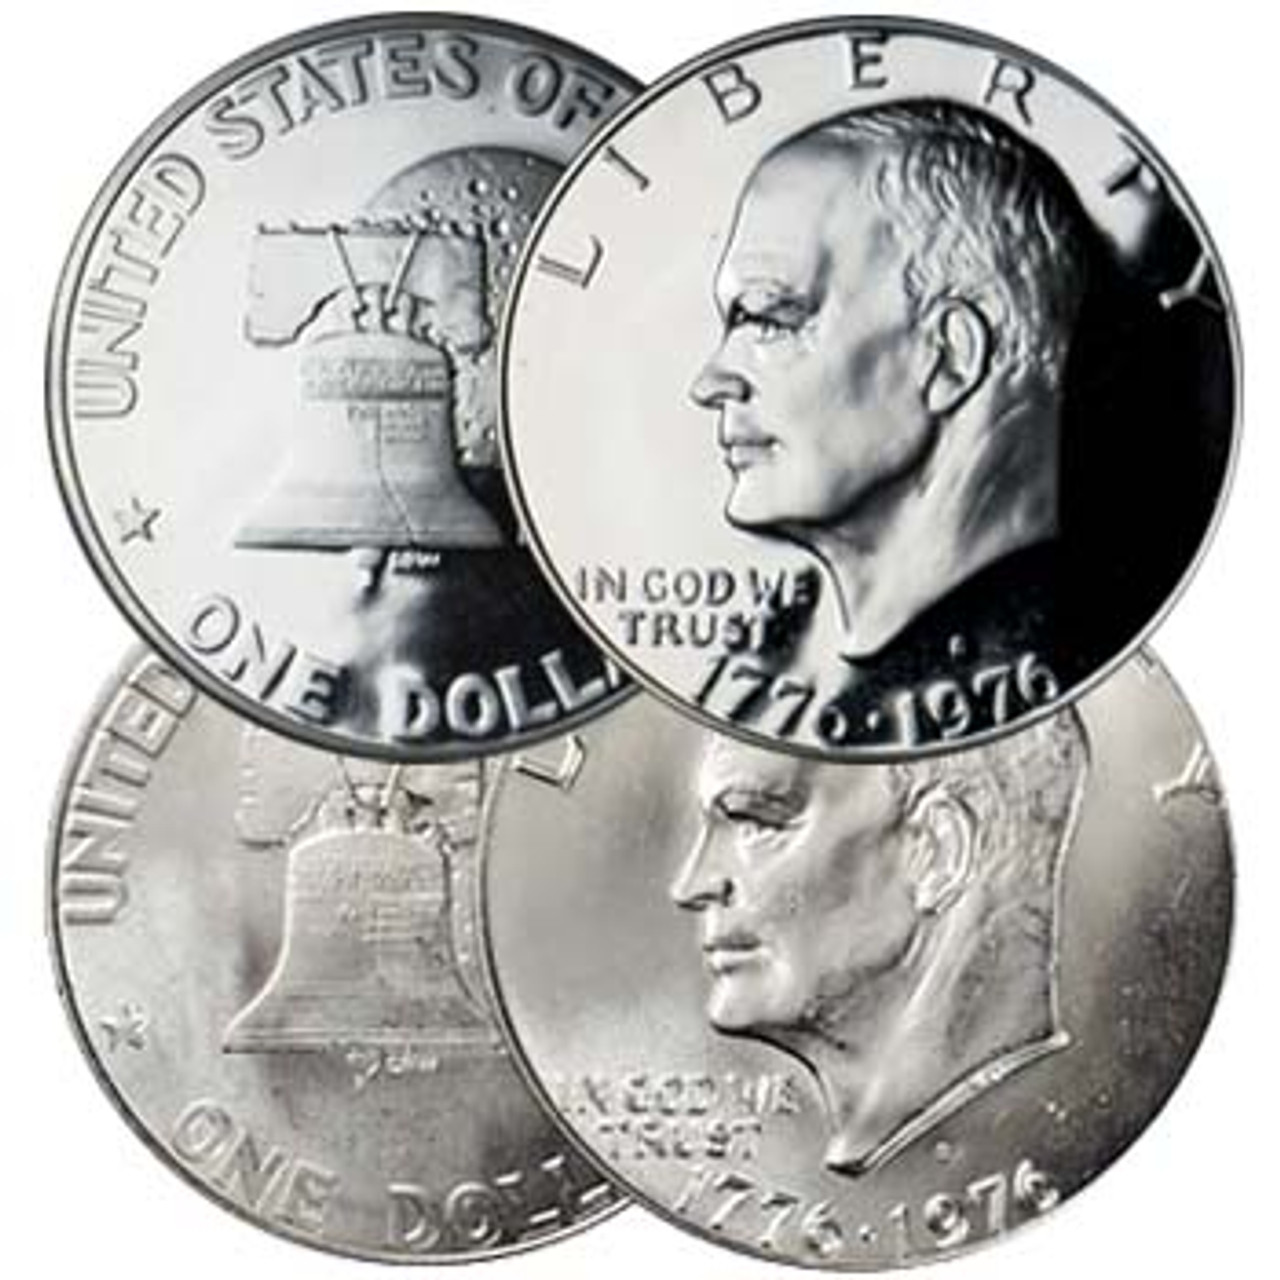 Eisenhower silver dollar complete set